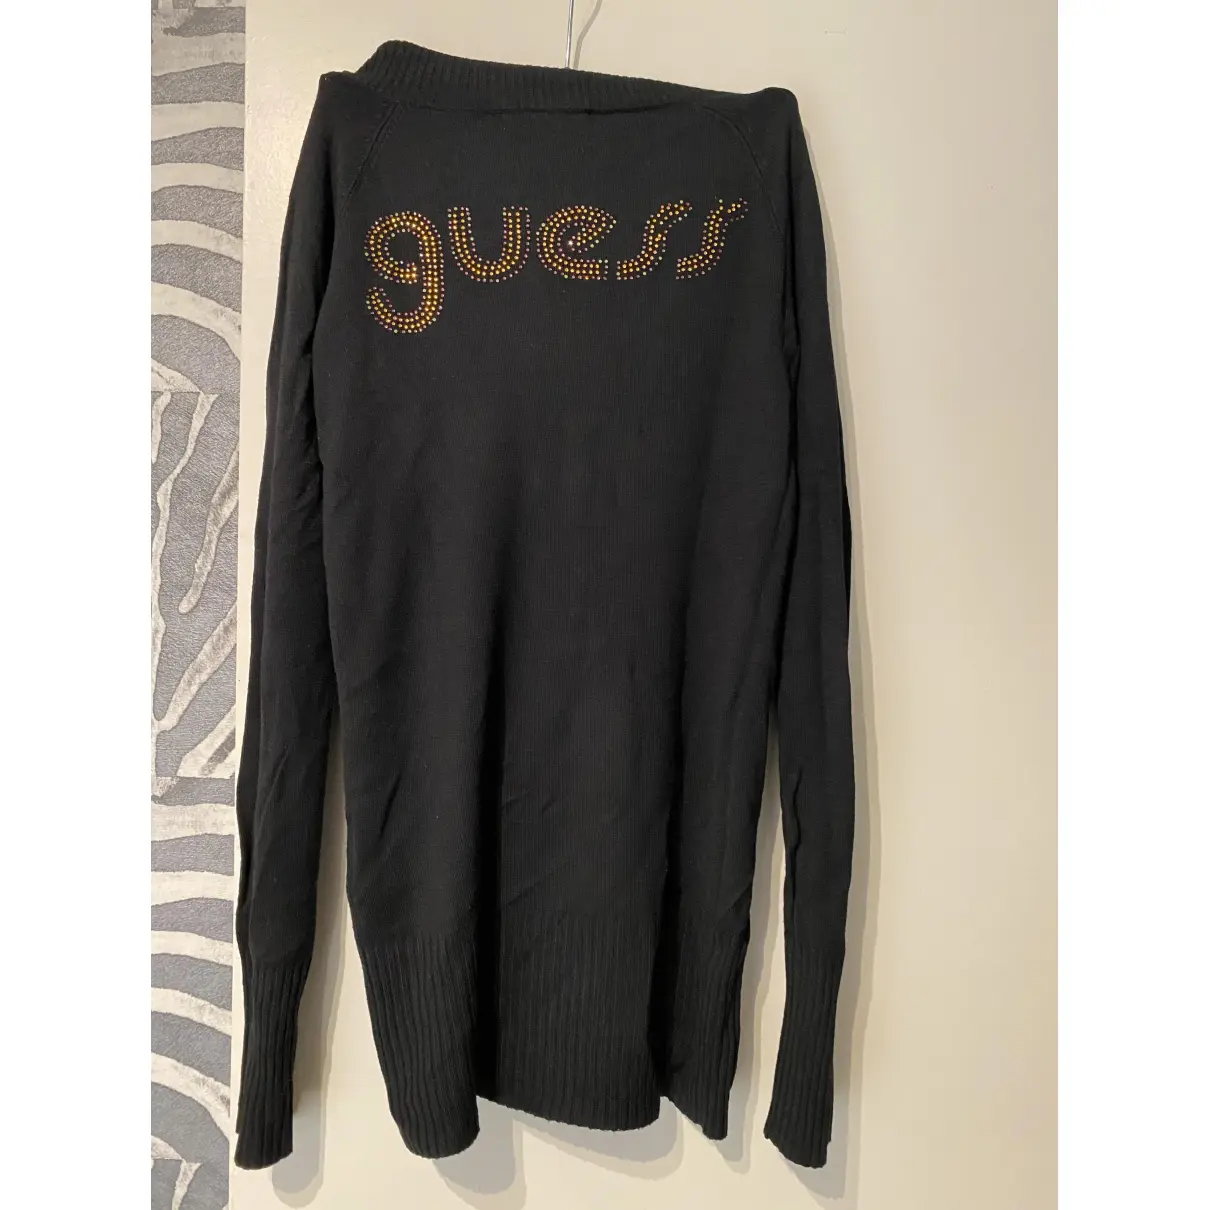 Buy GUESS Wool jumper online